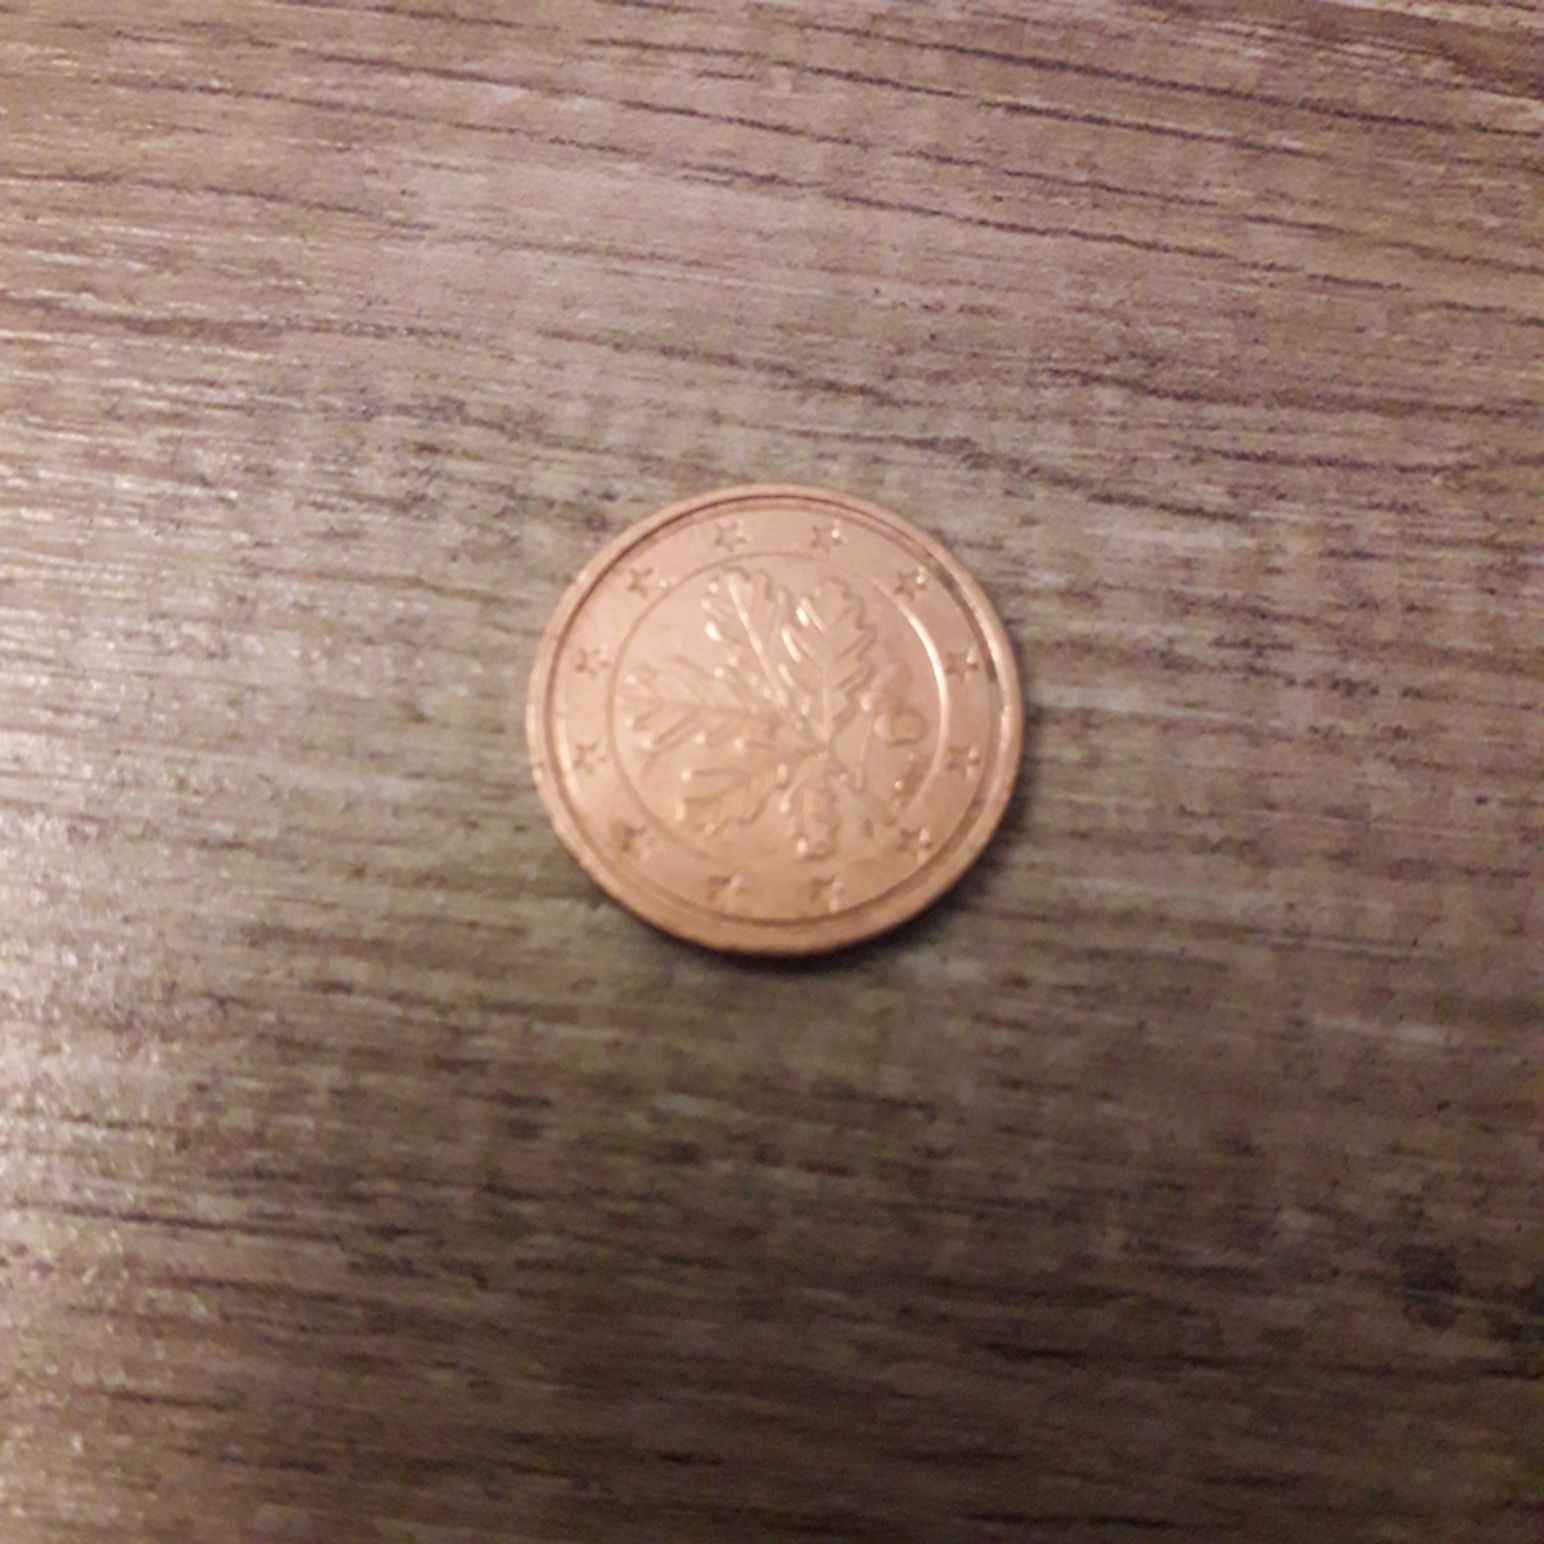 Lot monede 1, 2, 5 euro cent, anii 2000